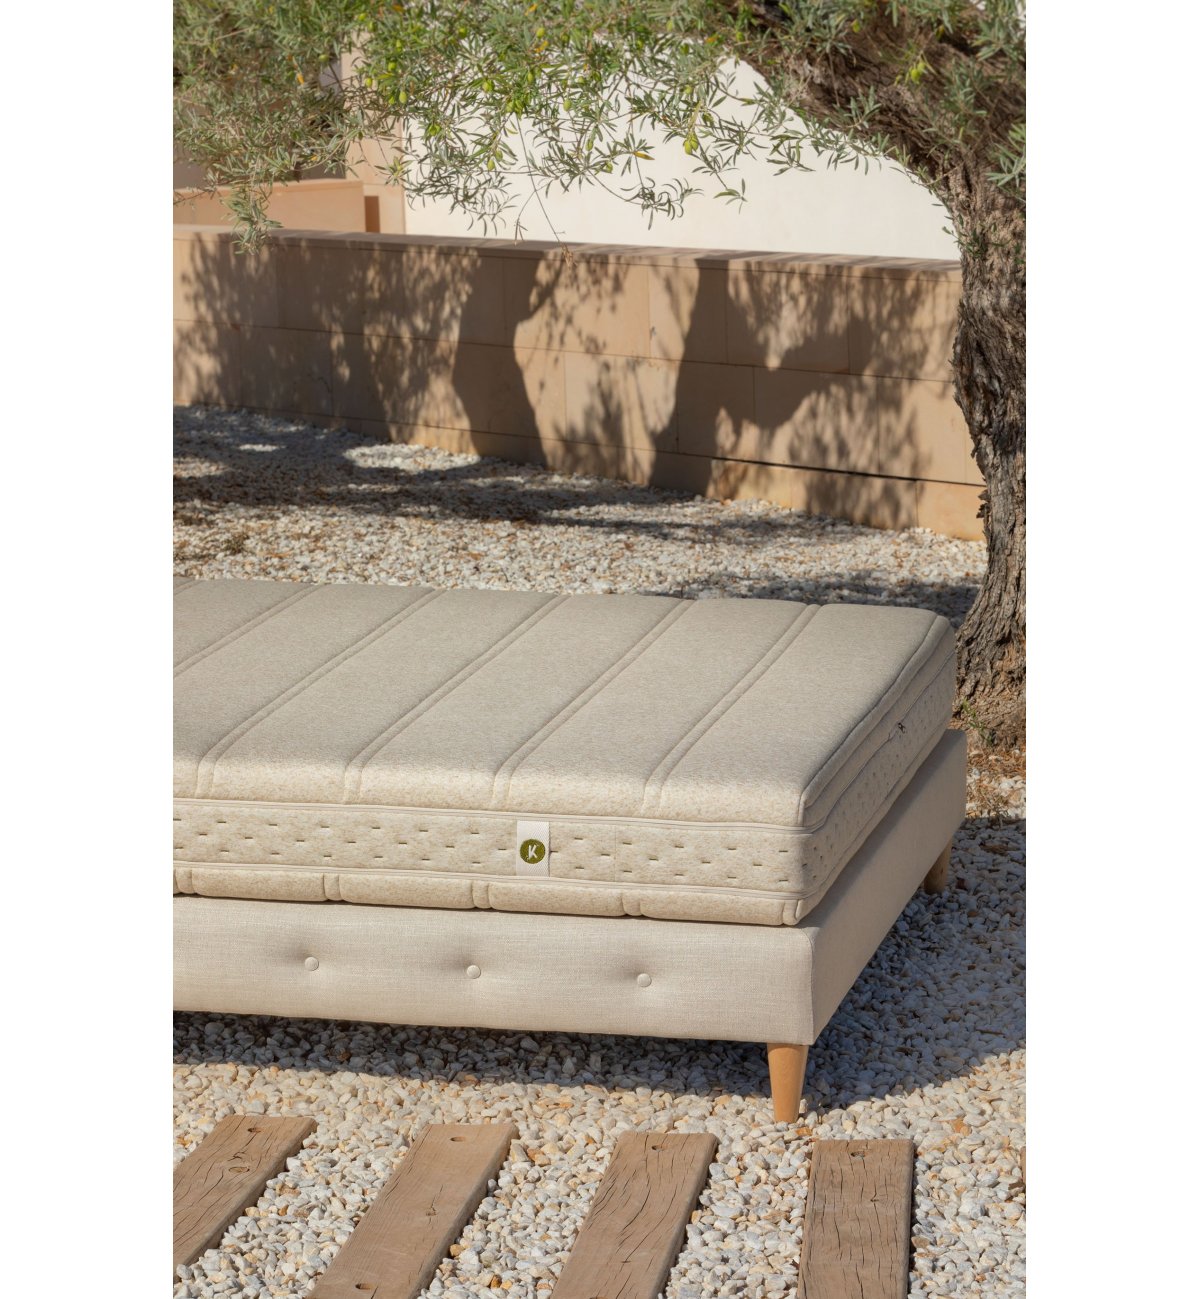 Baby mattress cover with Aloe Vera coating